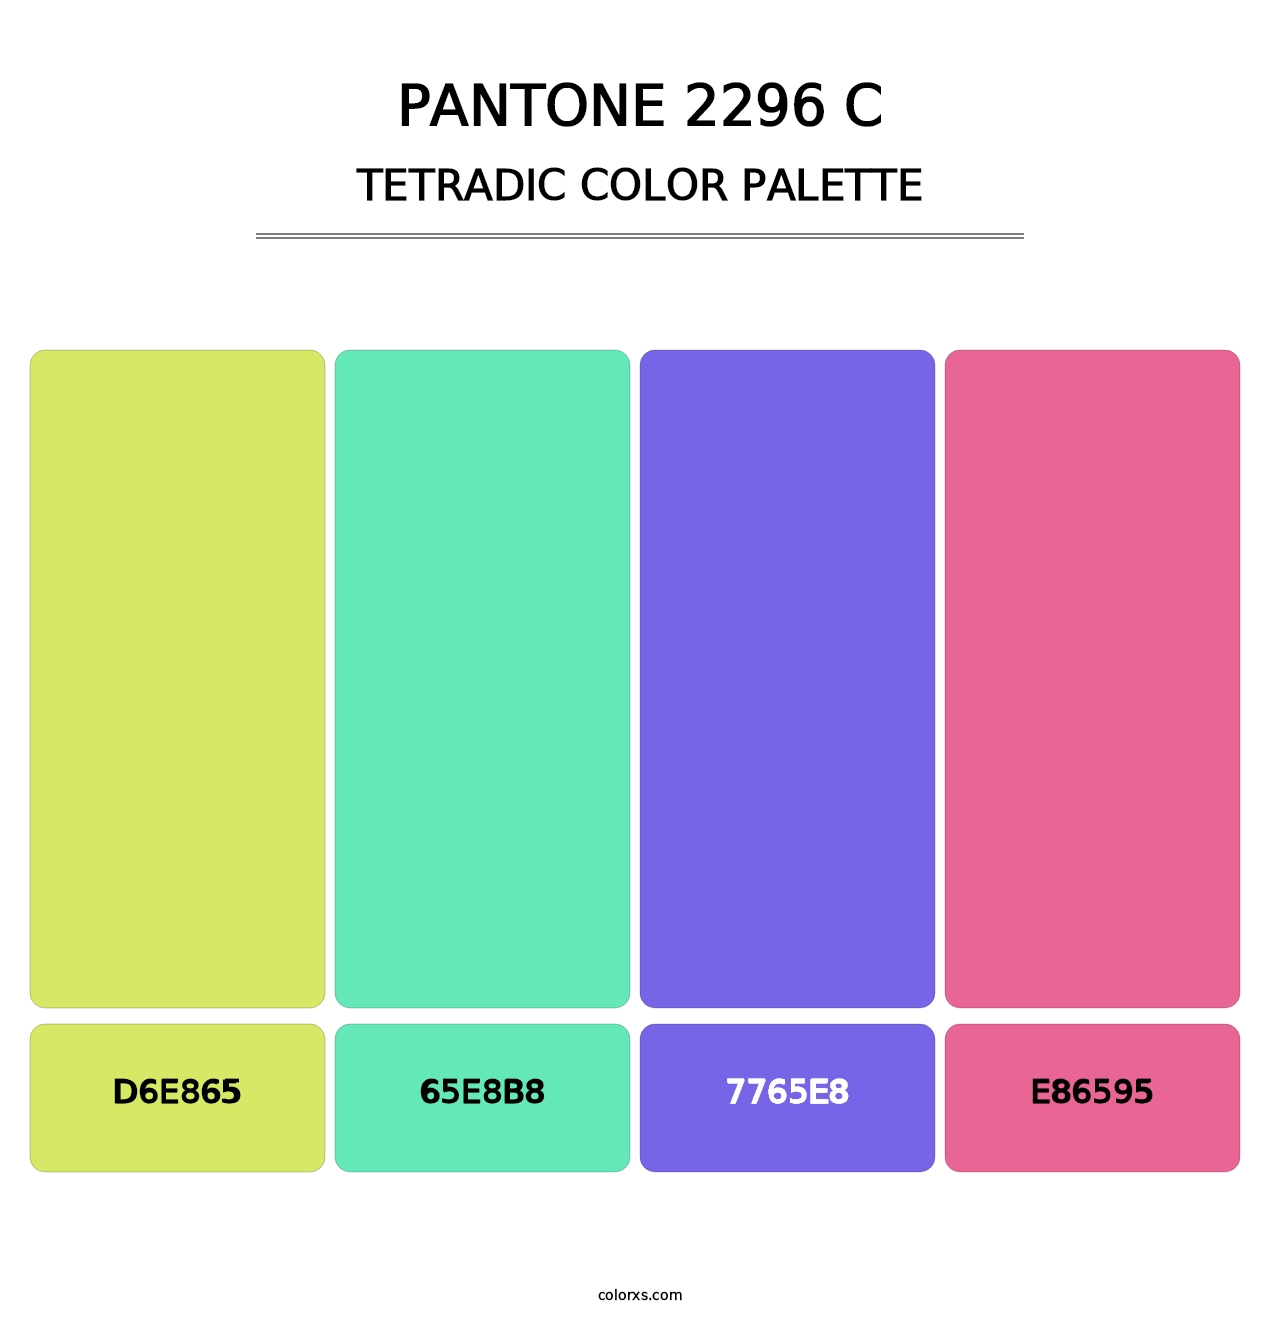 PANTONE 2296 C - Tetradic Color Palette